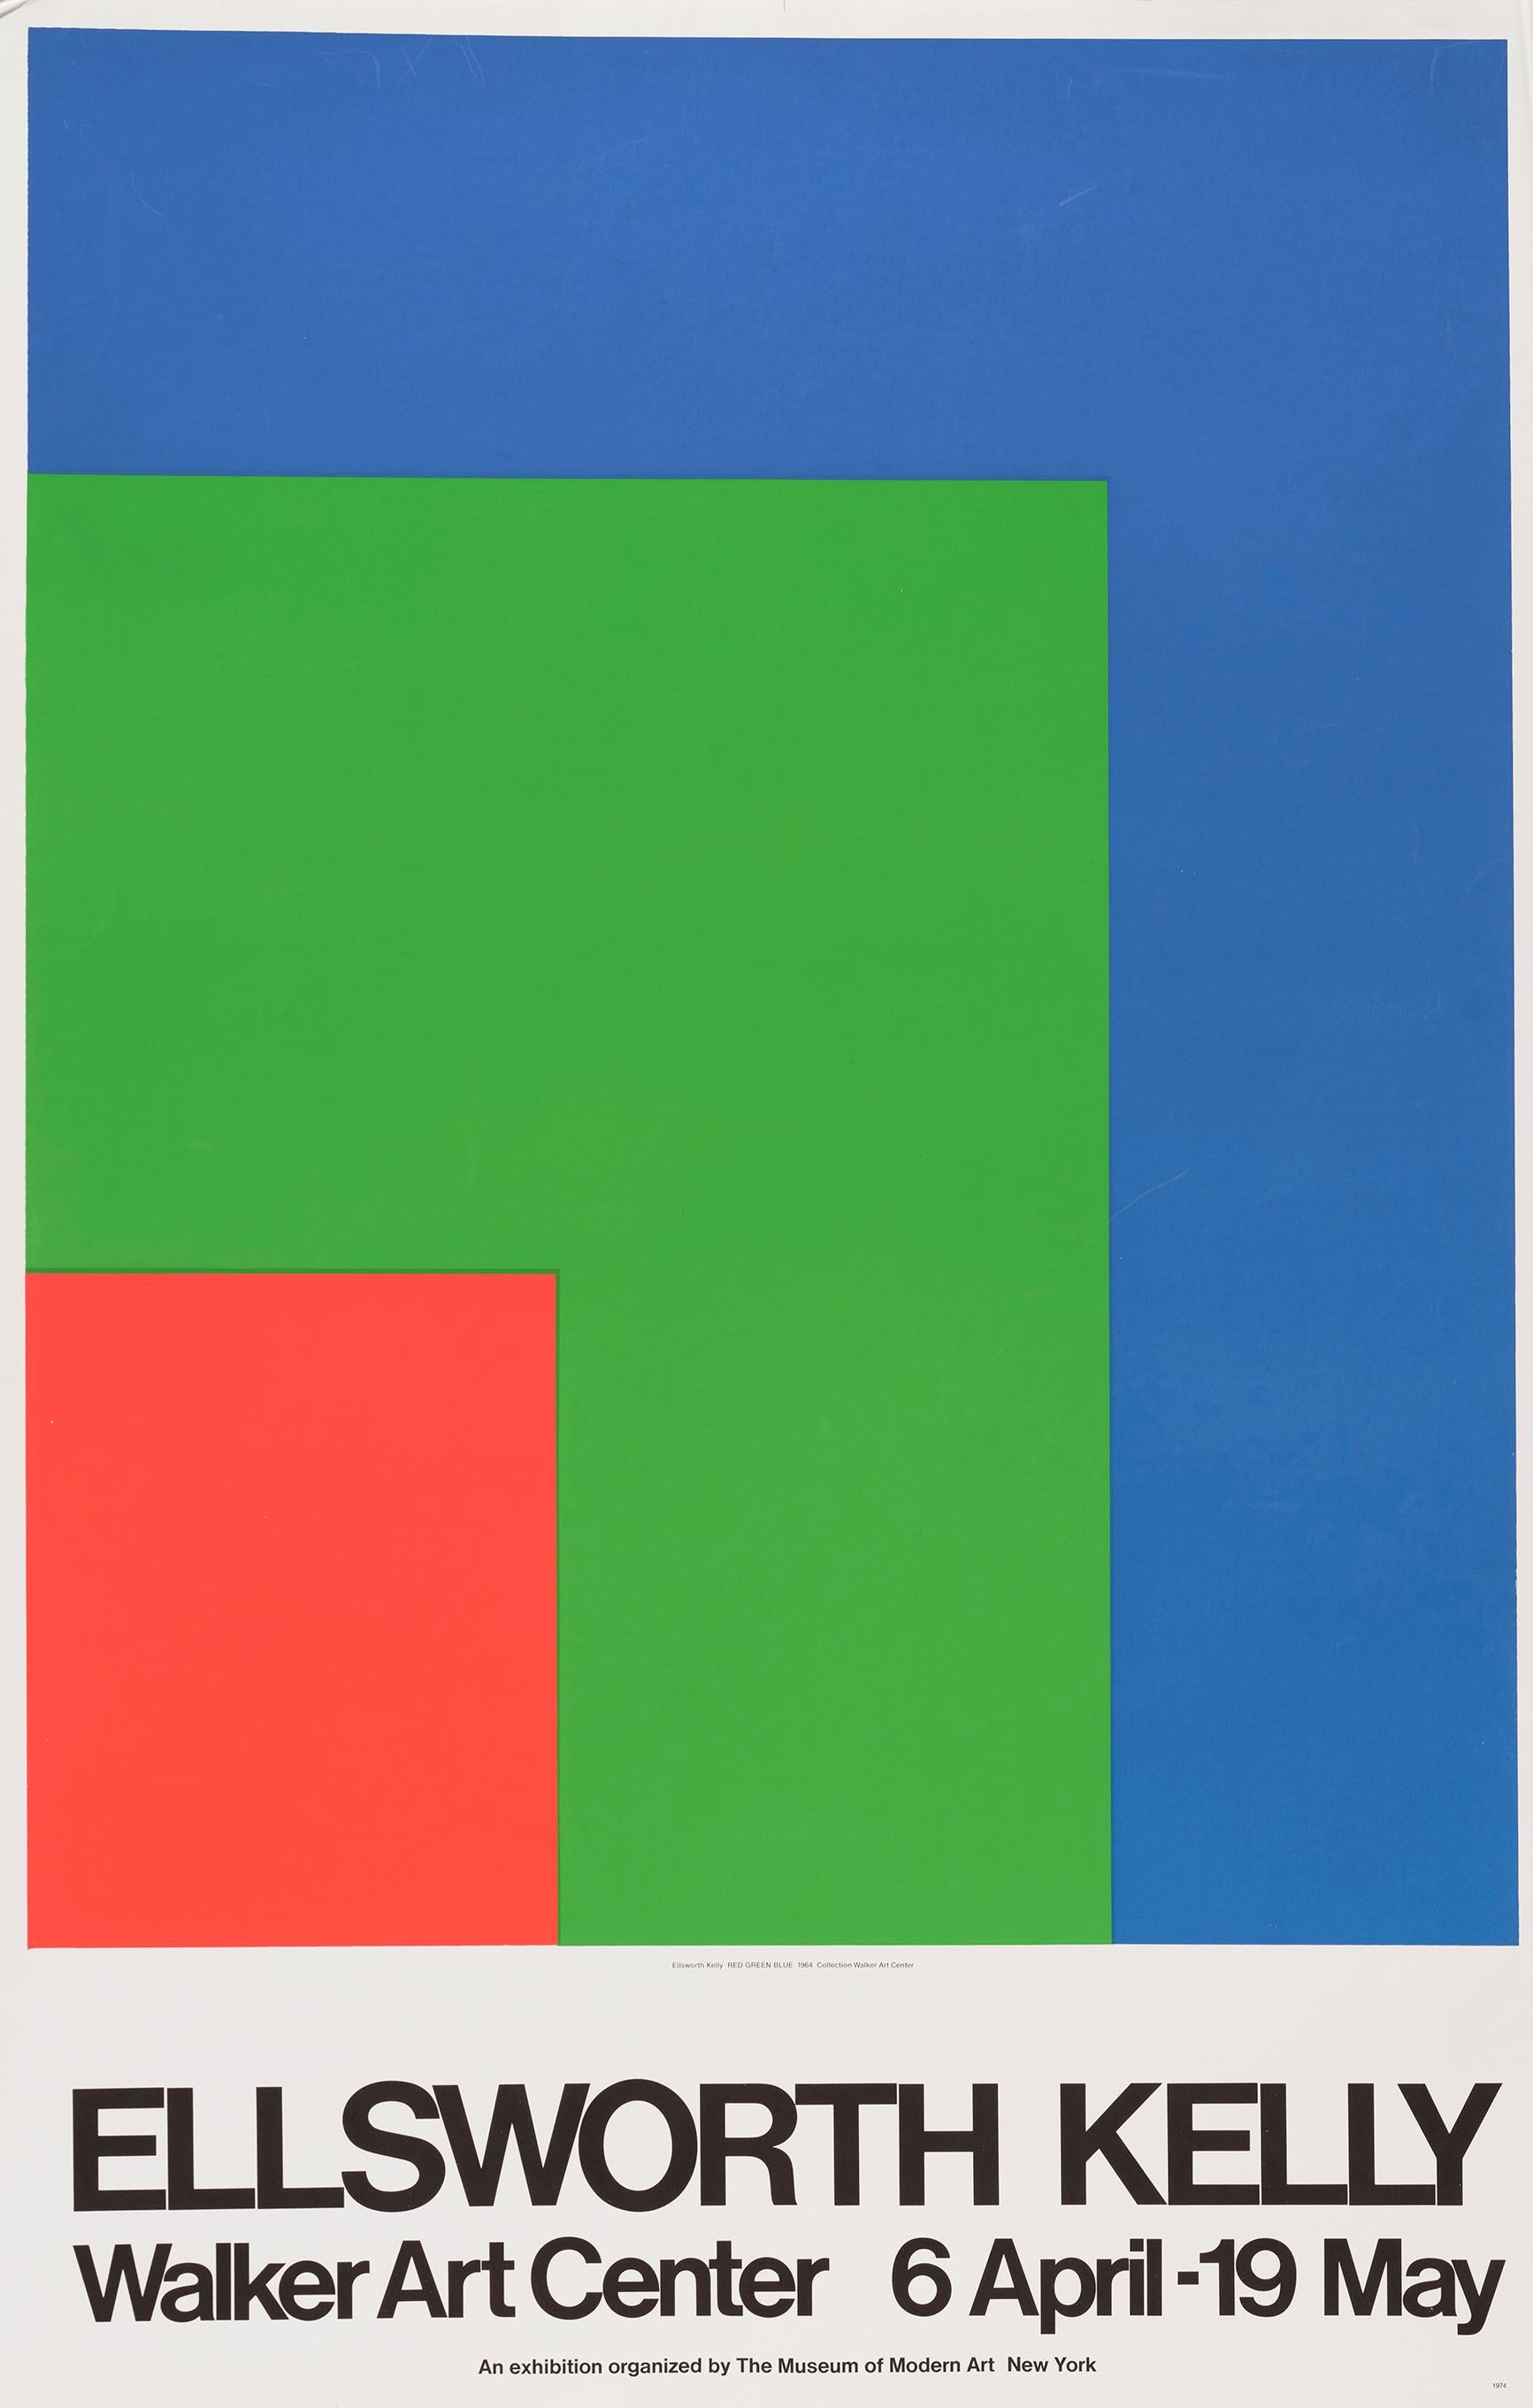 Ellsworth Kelly (Rotes Grün, Blau), Walker Art Center